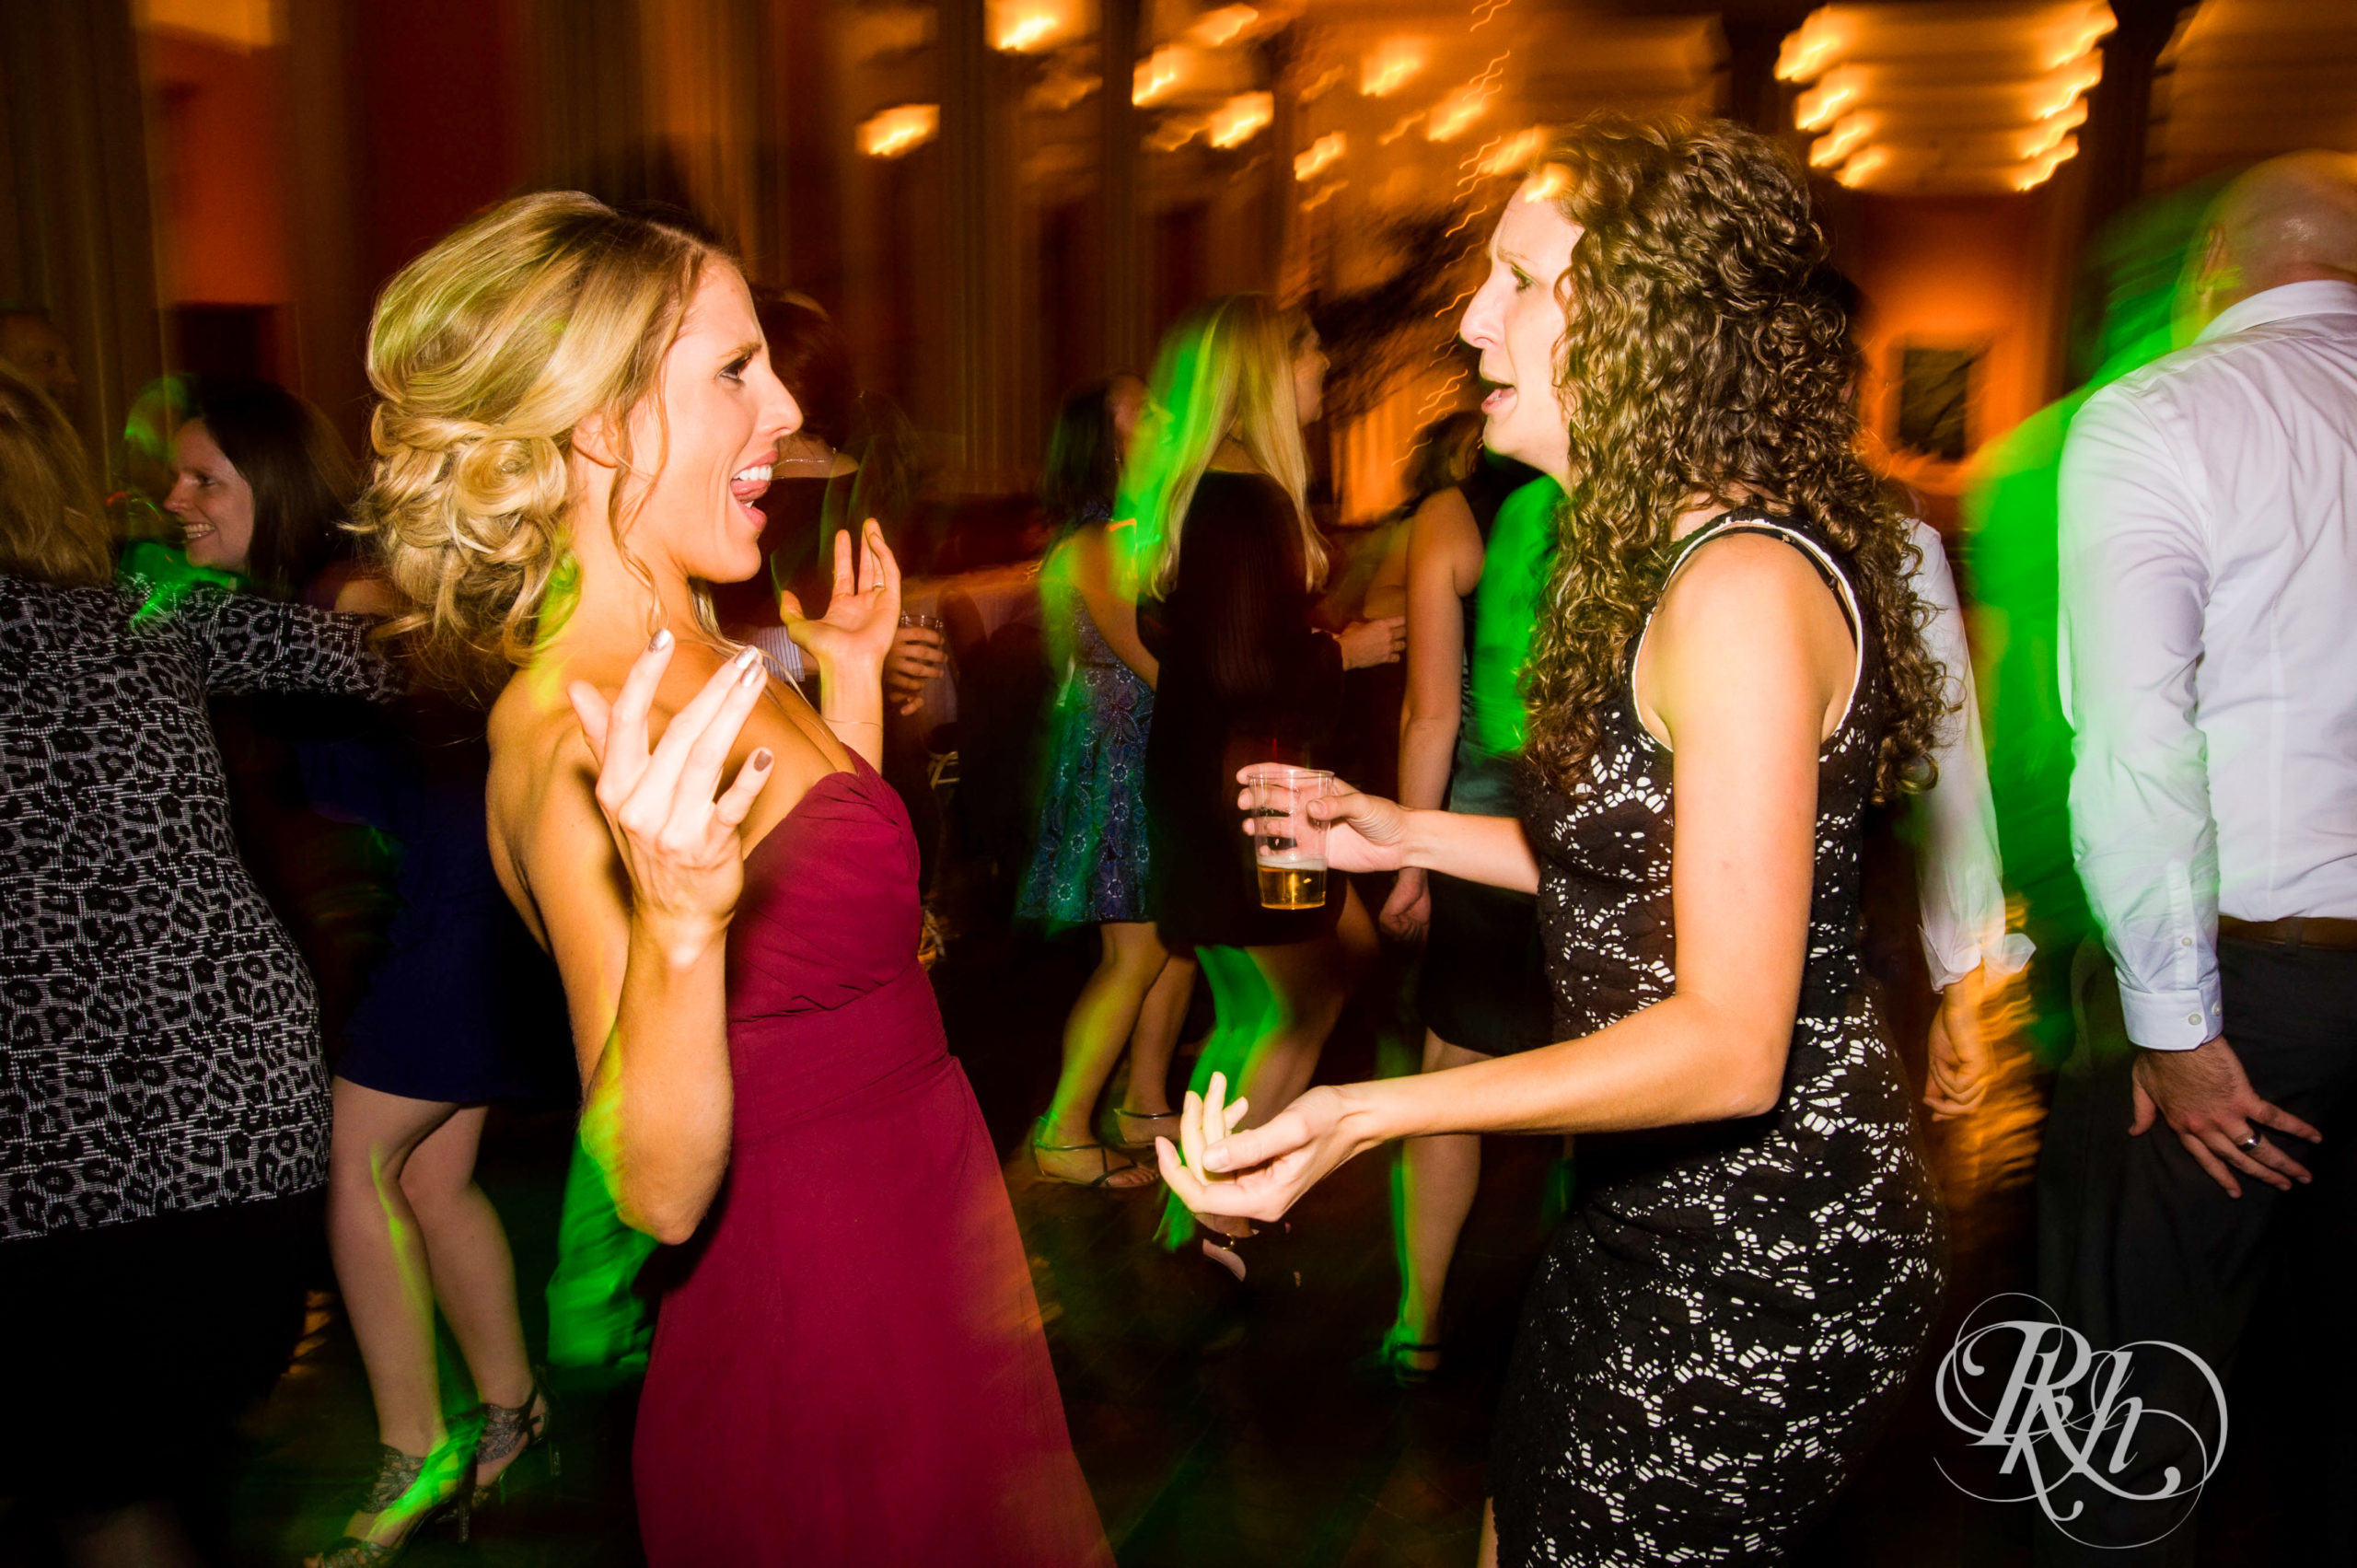 Guests dance during wedding reception on wedding day at Landmark Center in Saint Paul, Minnesota.